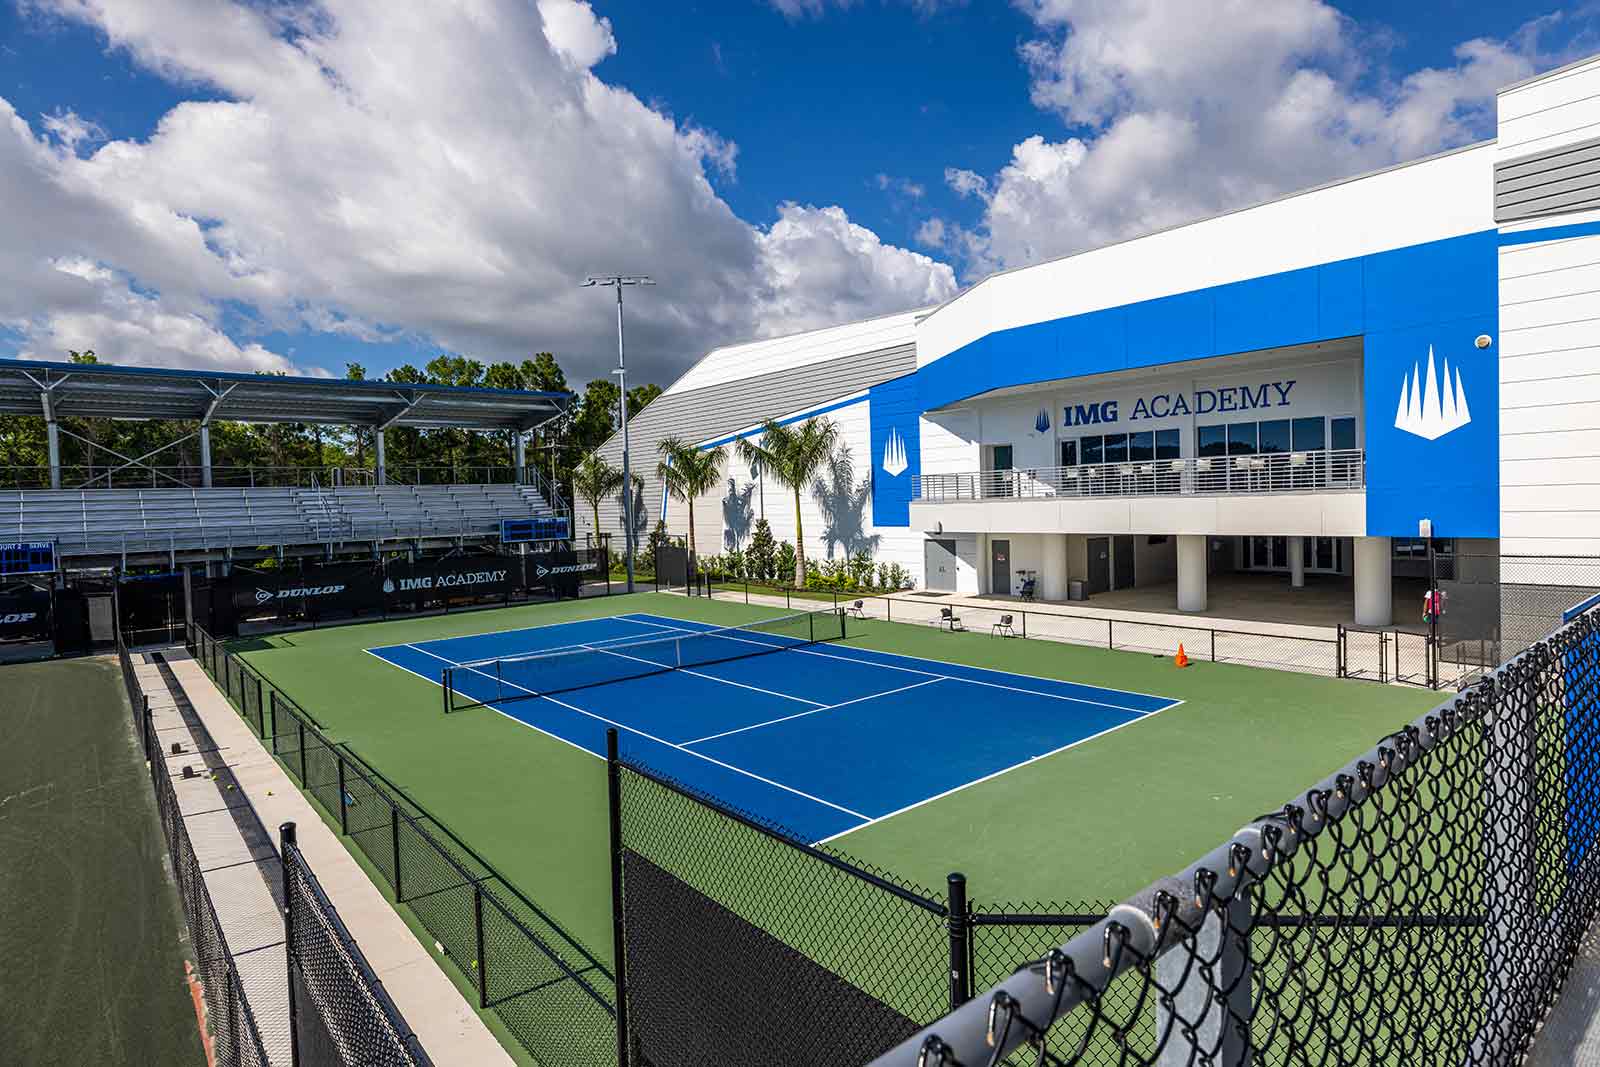 img academy tennis and basketball complex